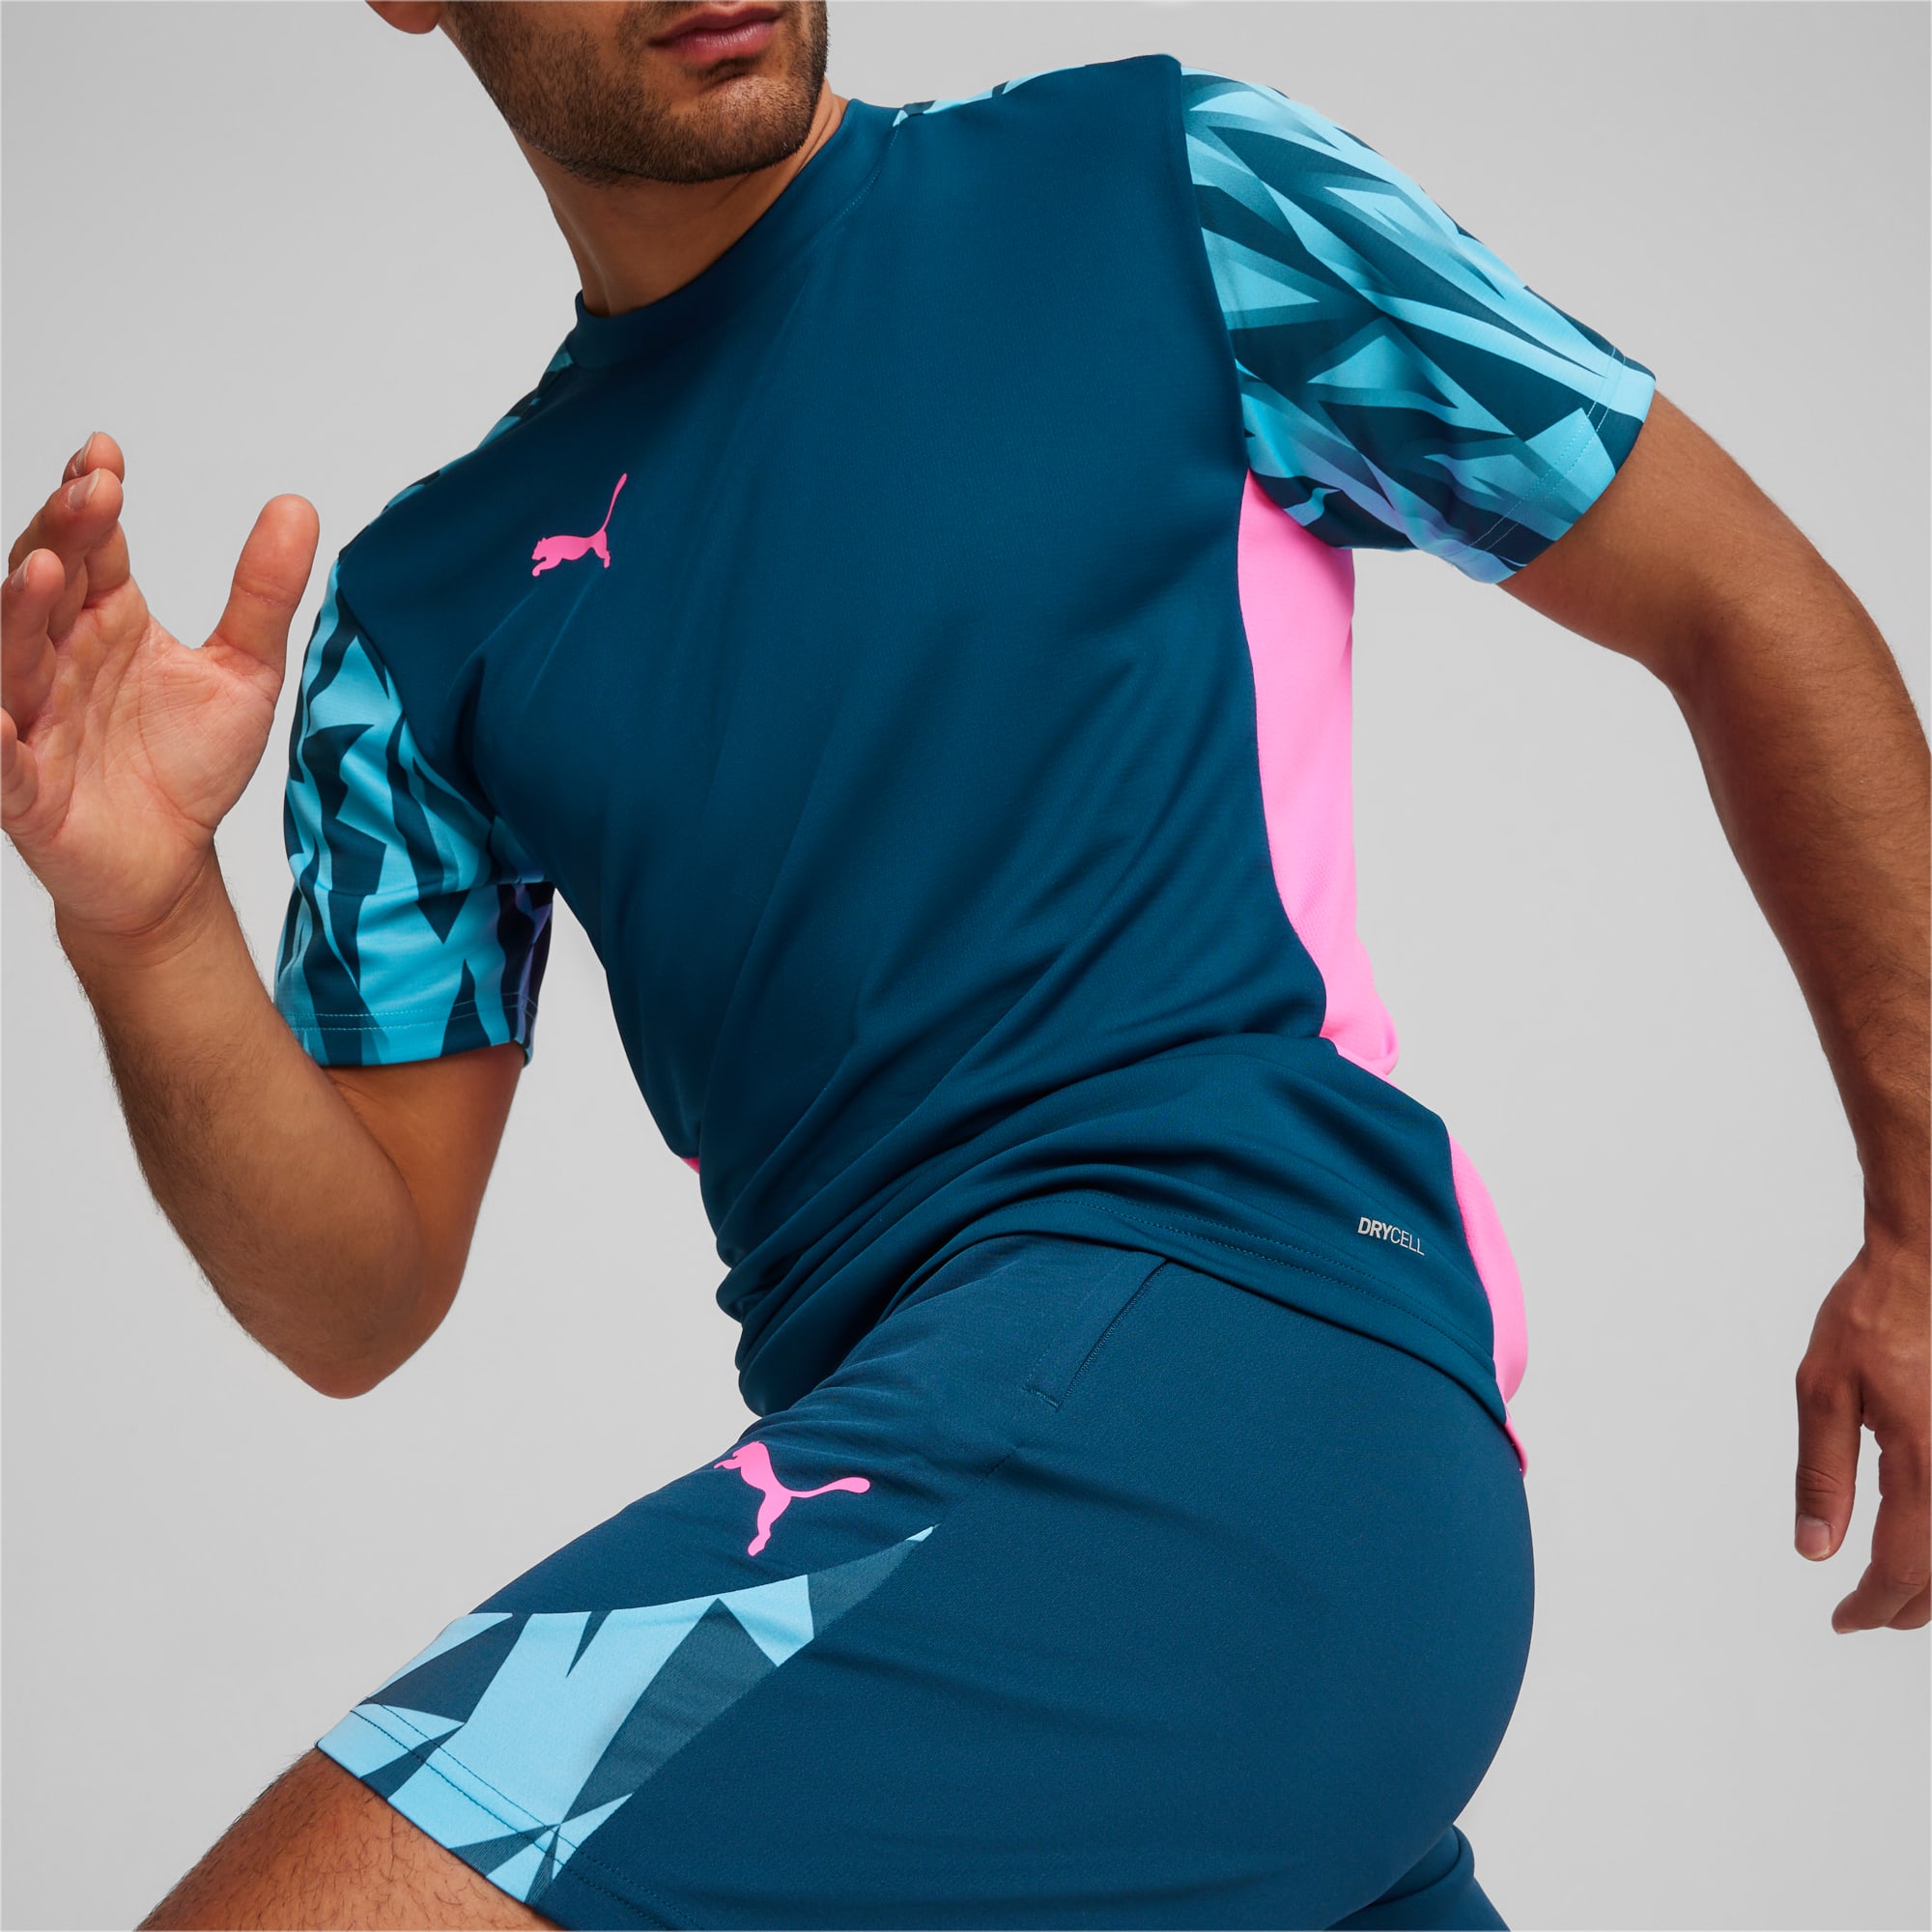 individualFINAL Men's Soccer Shorts | PUMA